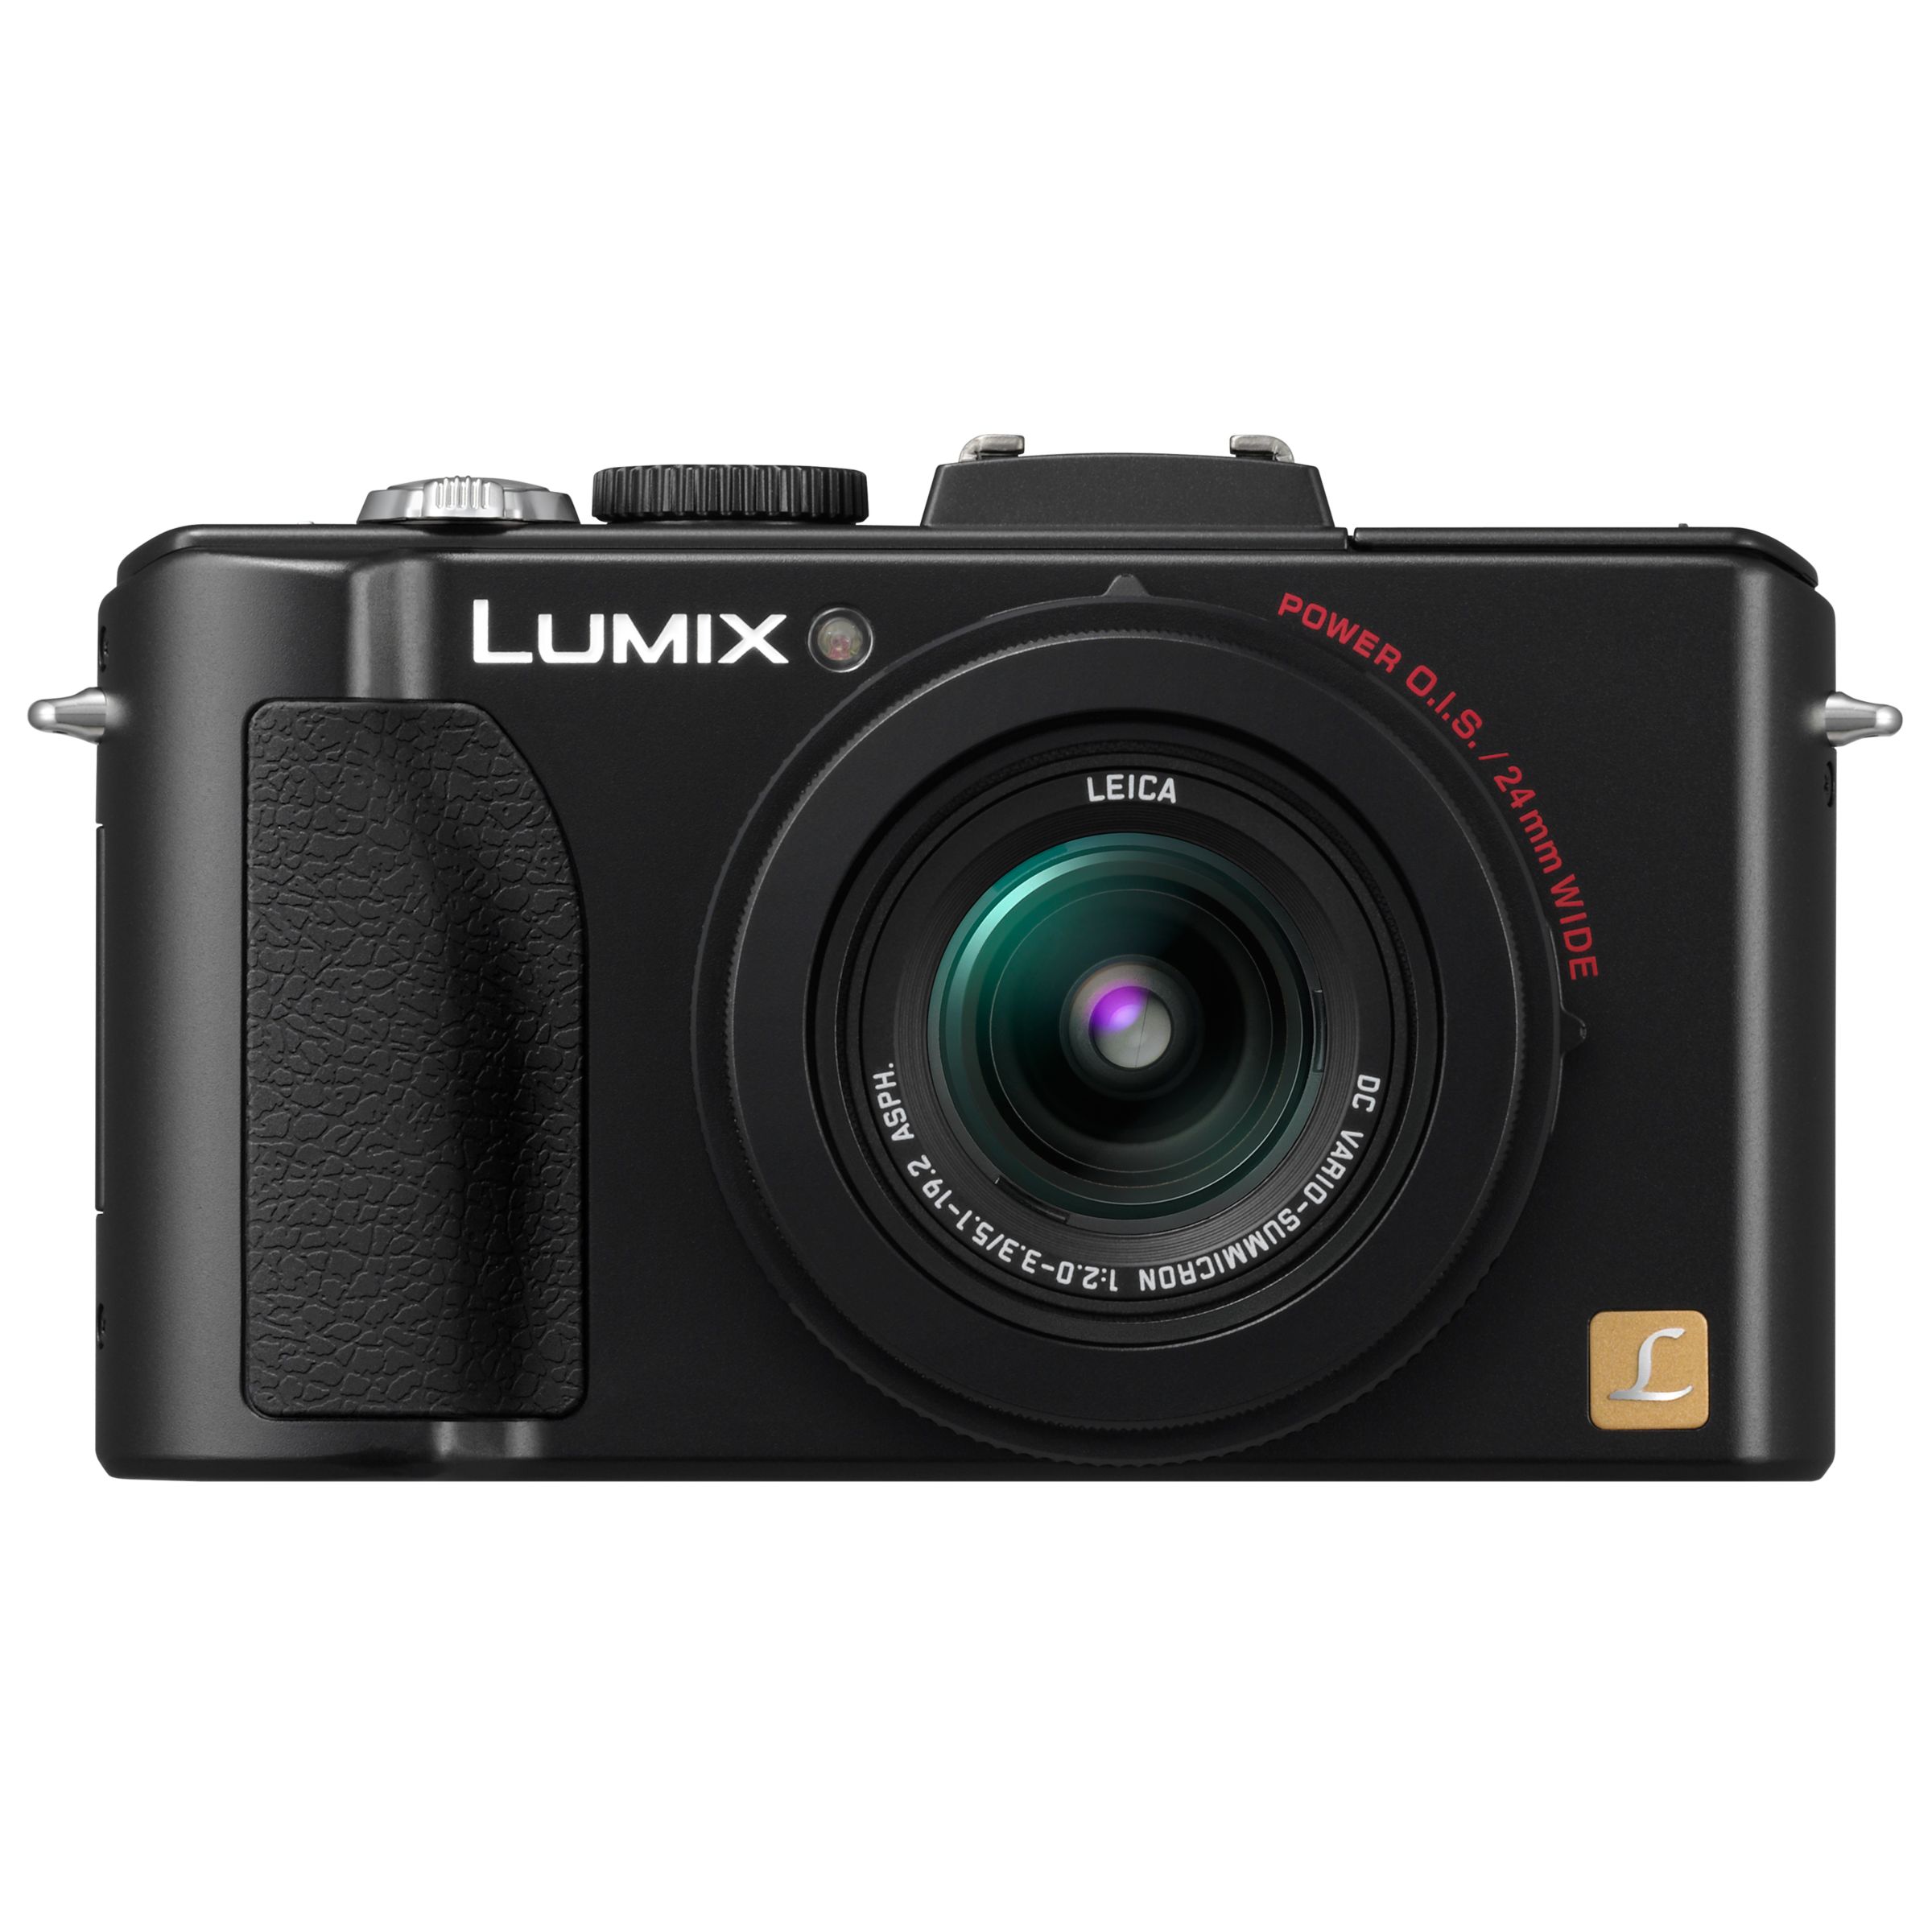 Panasonic Lumix DMC-LX5 Digital Camera, Black at John Lewis